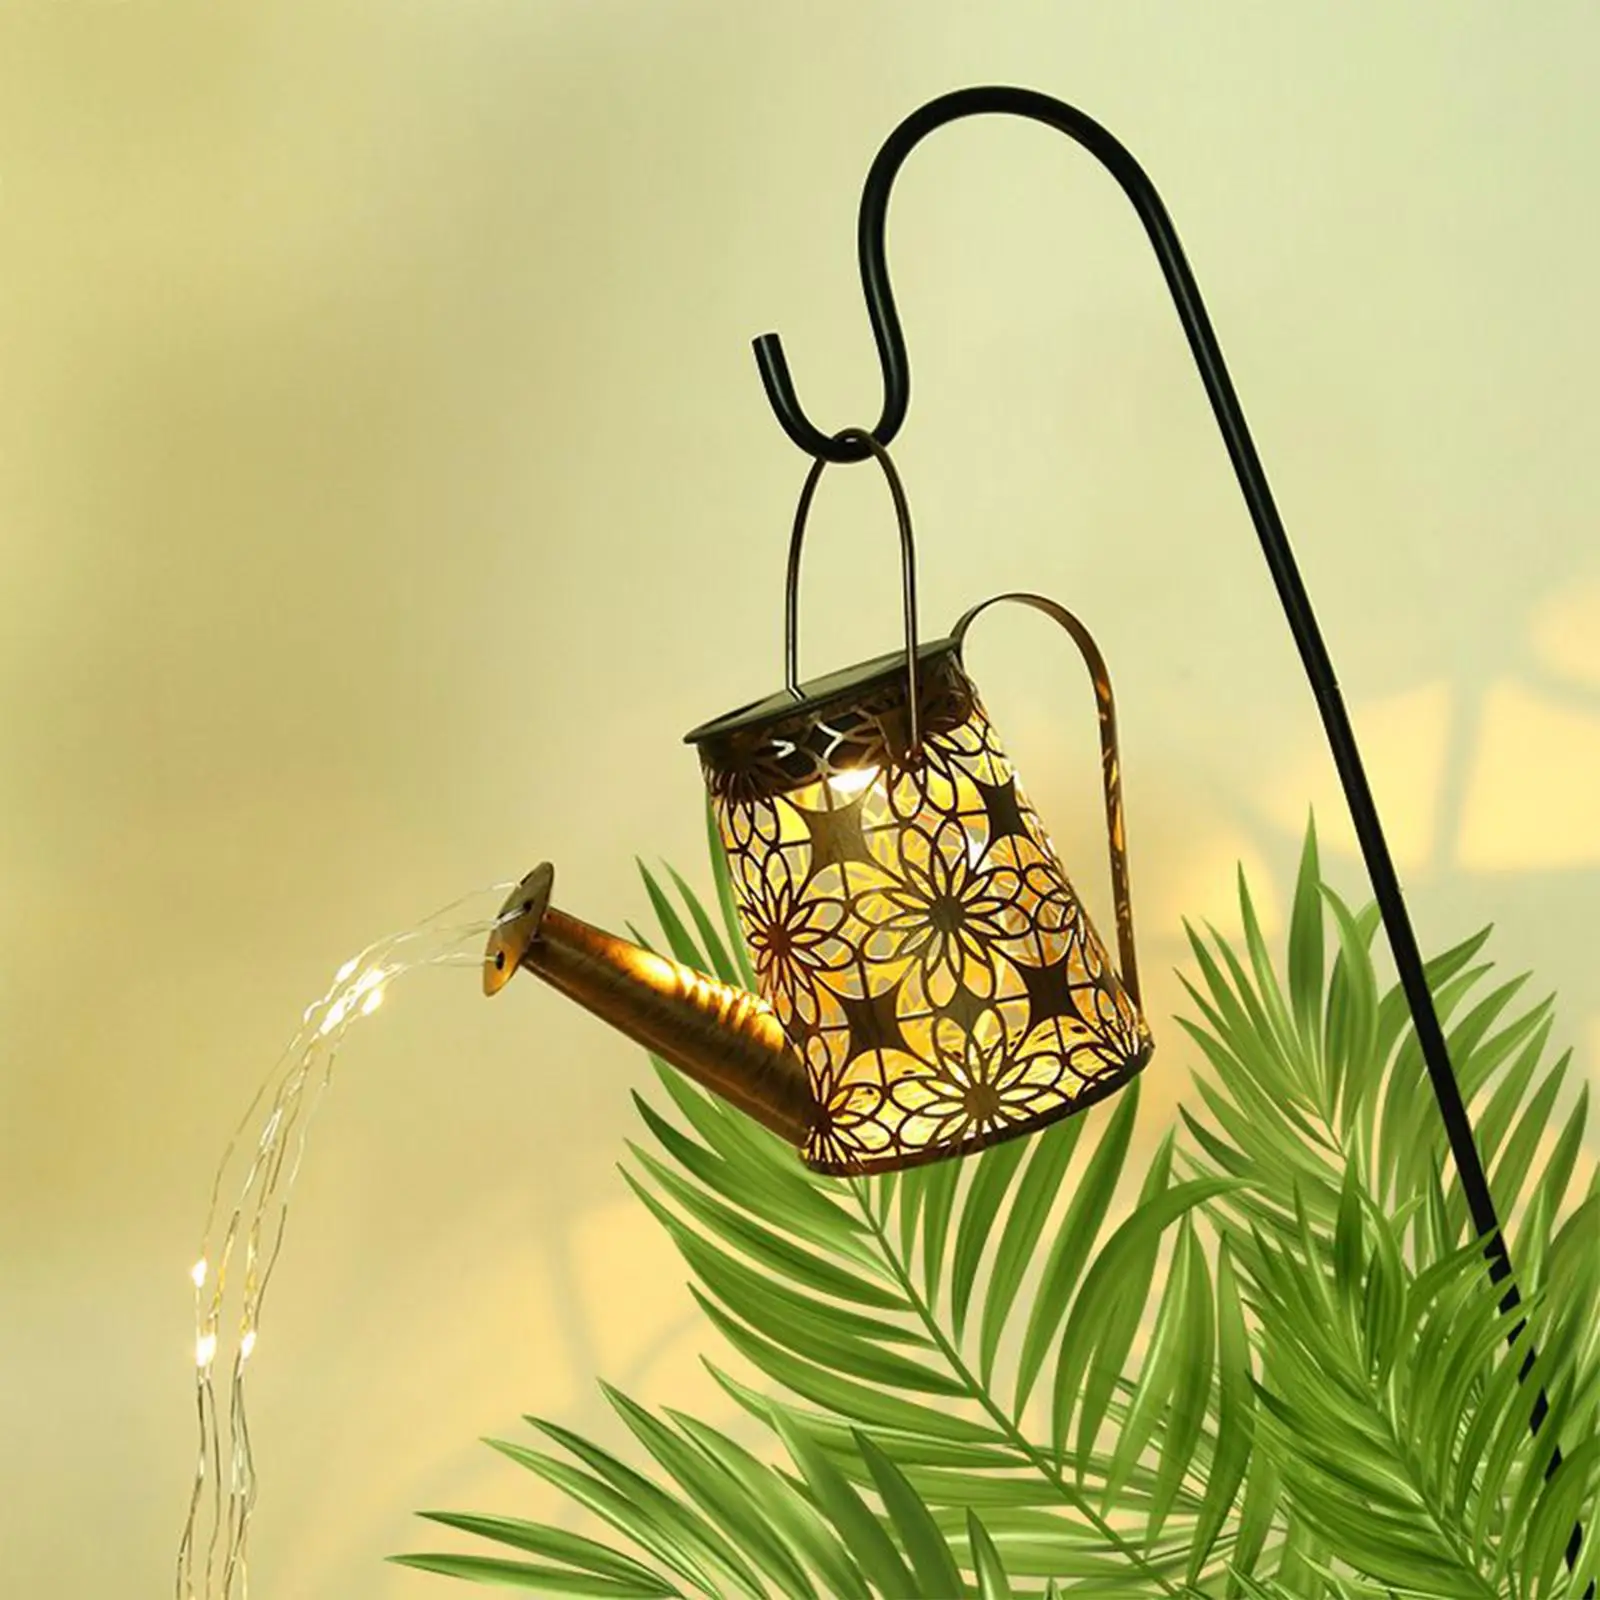 Water Can Light Strip Light Fairy Light Garden Lawn Lamp, for Walkway Yard Decor